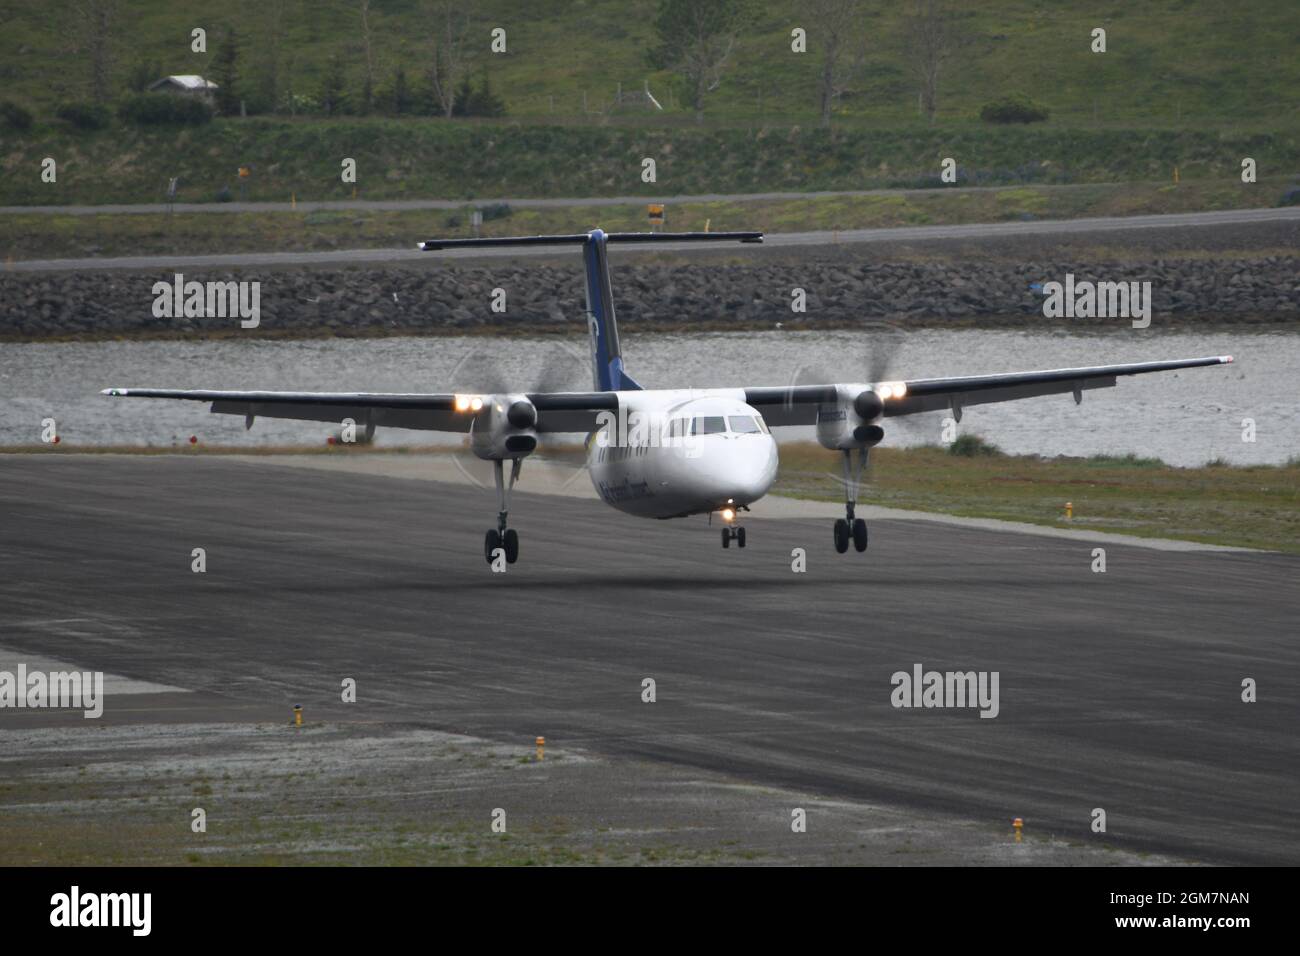 Air Iceland Connect Dash8-200 landing at Isafjördur airport Stock Photo